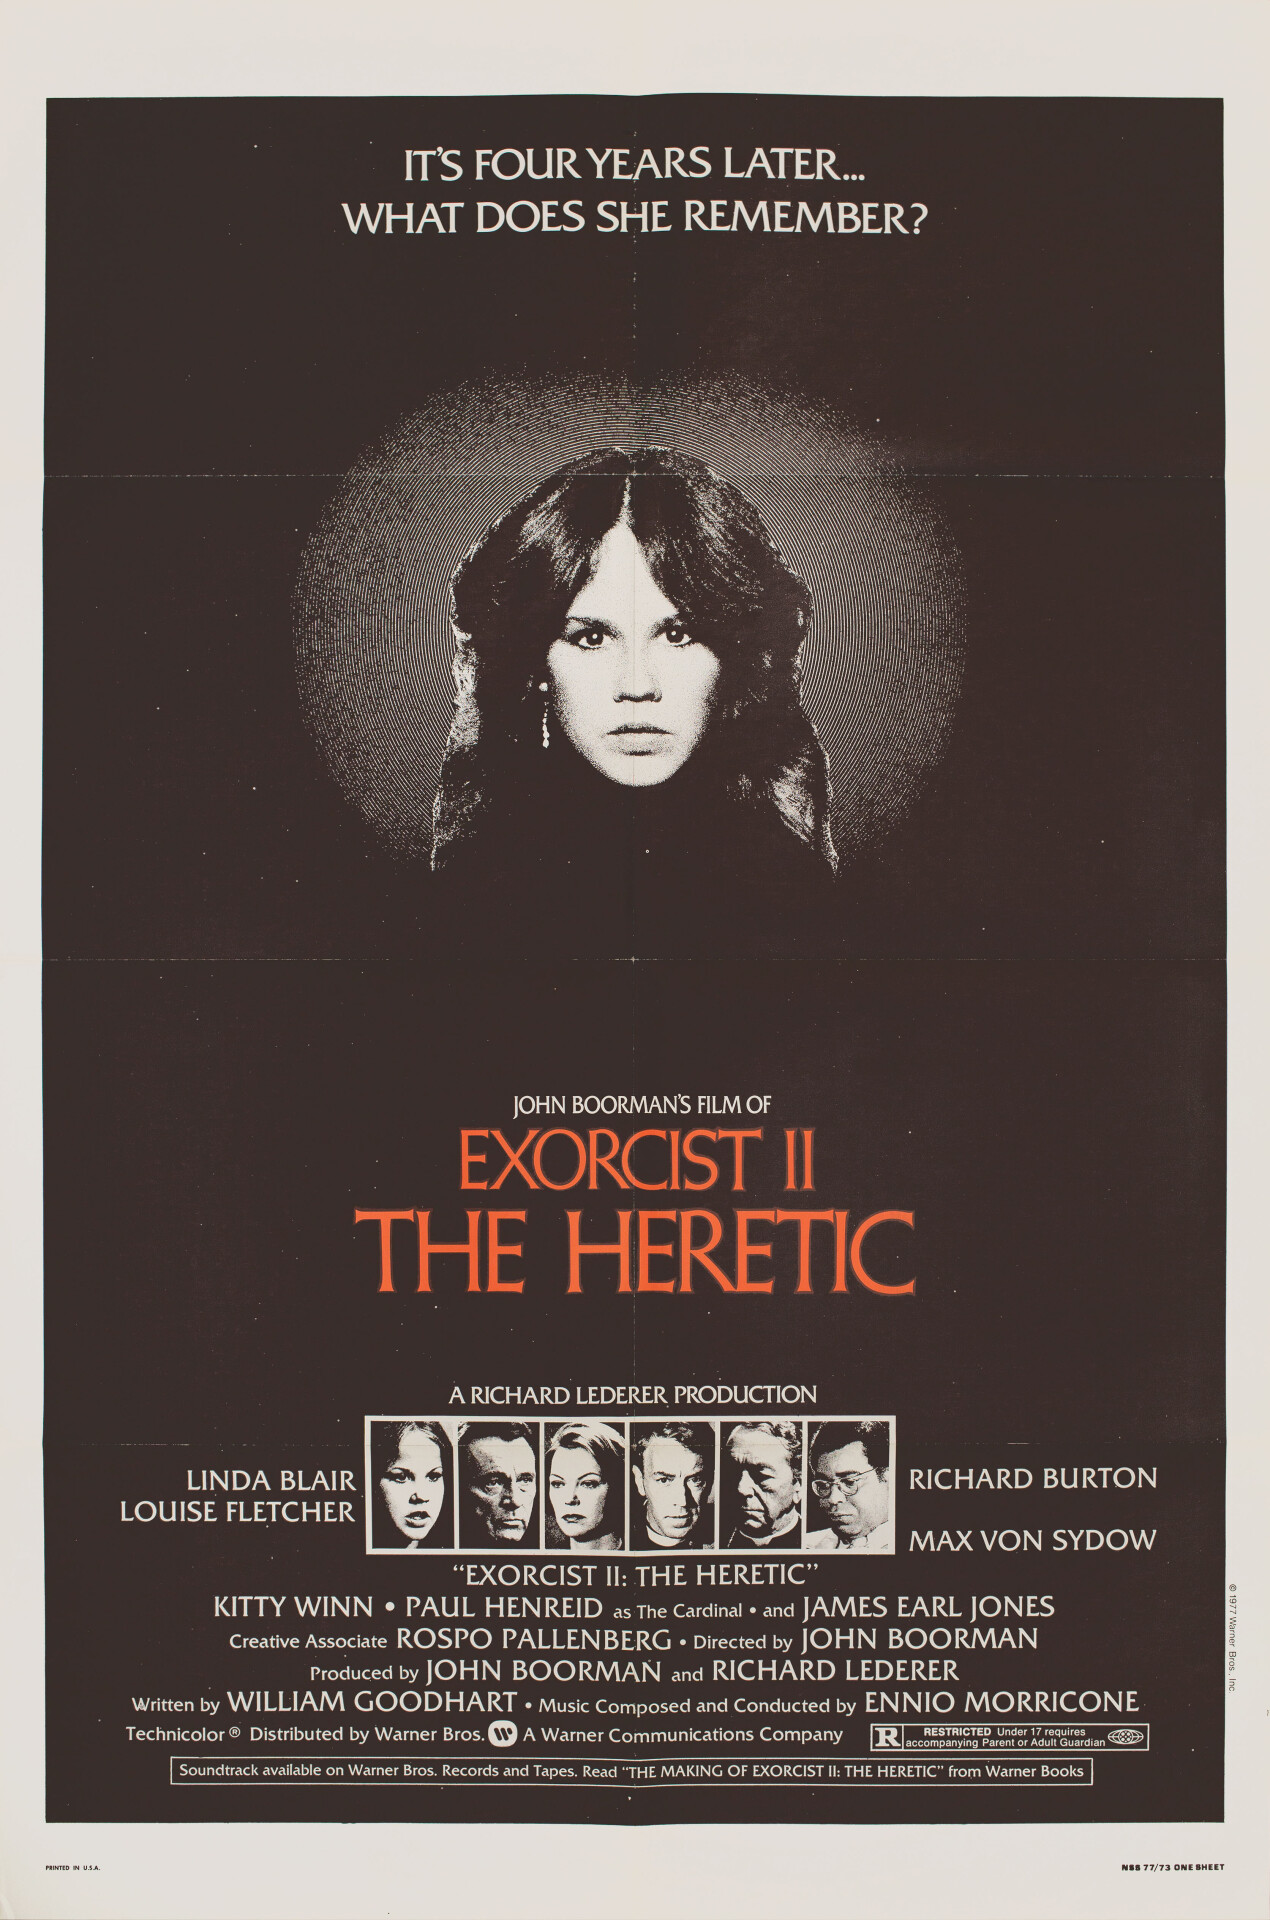 Изгоняющий дьявола II: Еретик (Exorcist II The Heretic, 1977), режиссёр Джон Бурман, американский постер к фильму (ужасы, 1977 год)